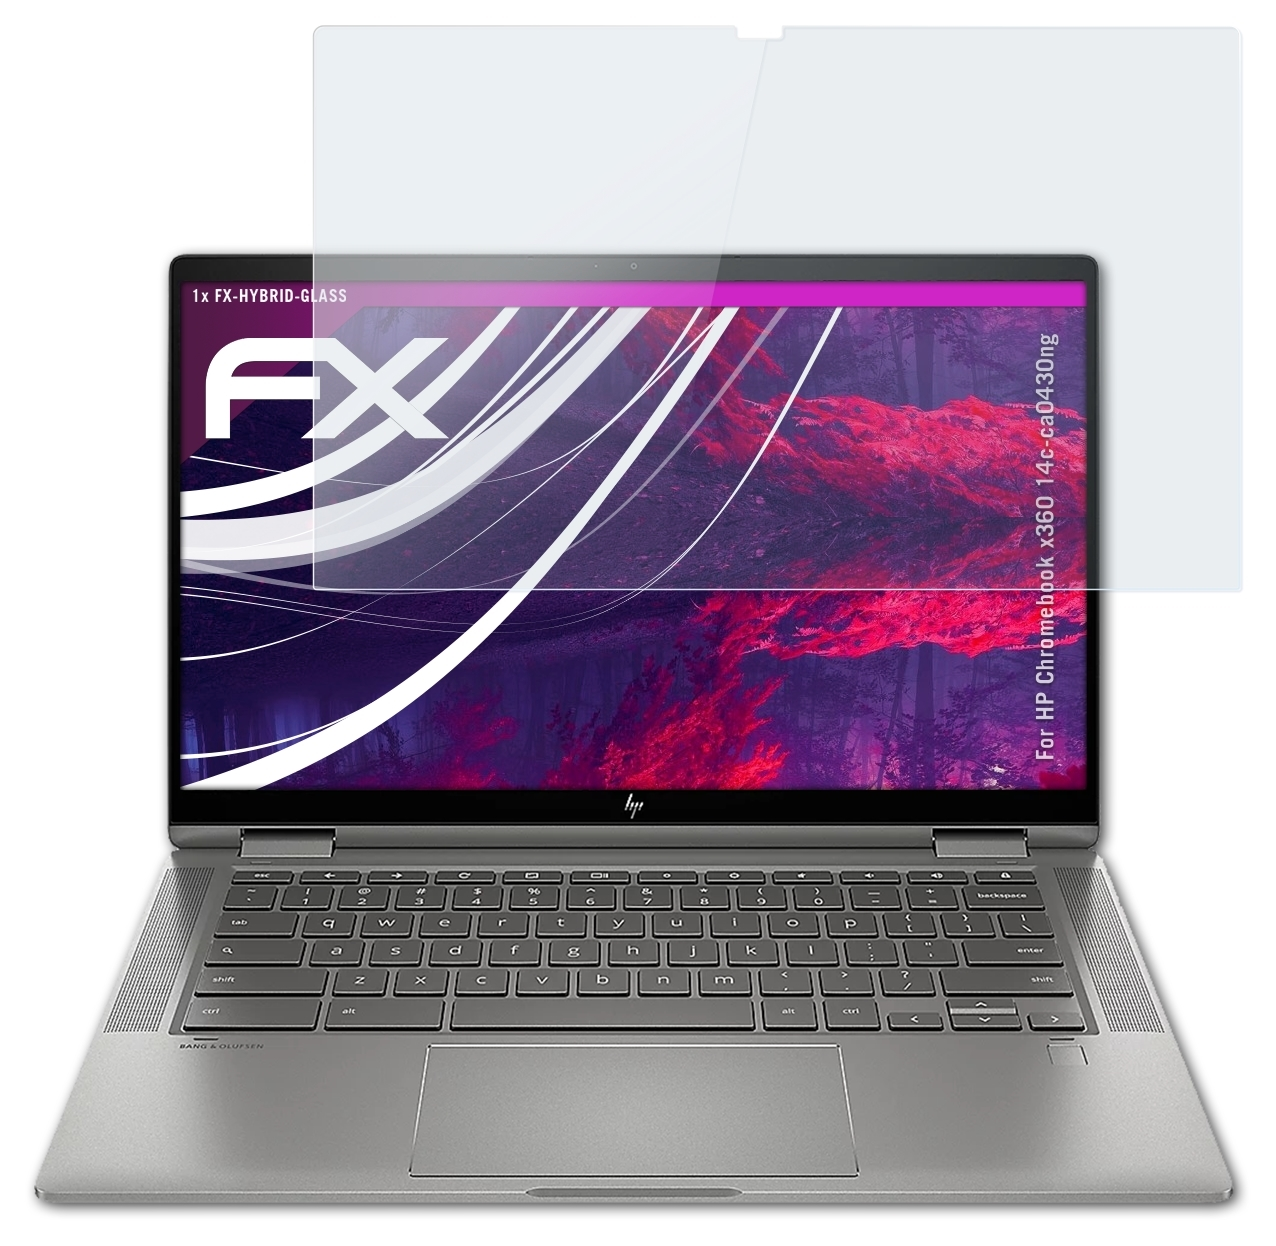 (14c-ca0430ng)) HP FX-Hybrid-Glass x360 Chromebook Schutzglas(für ATFOLIX